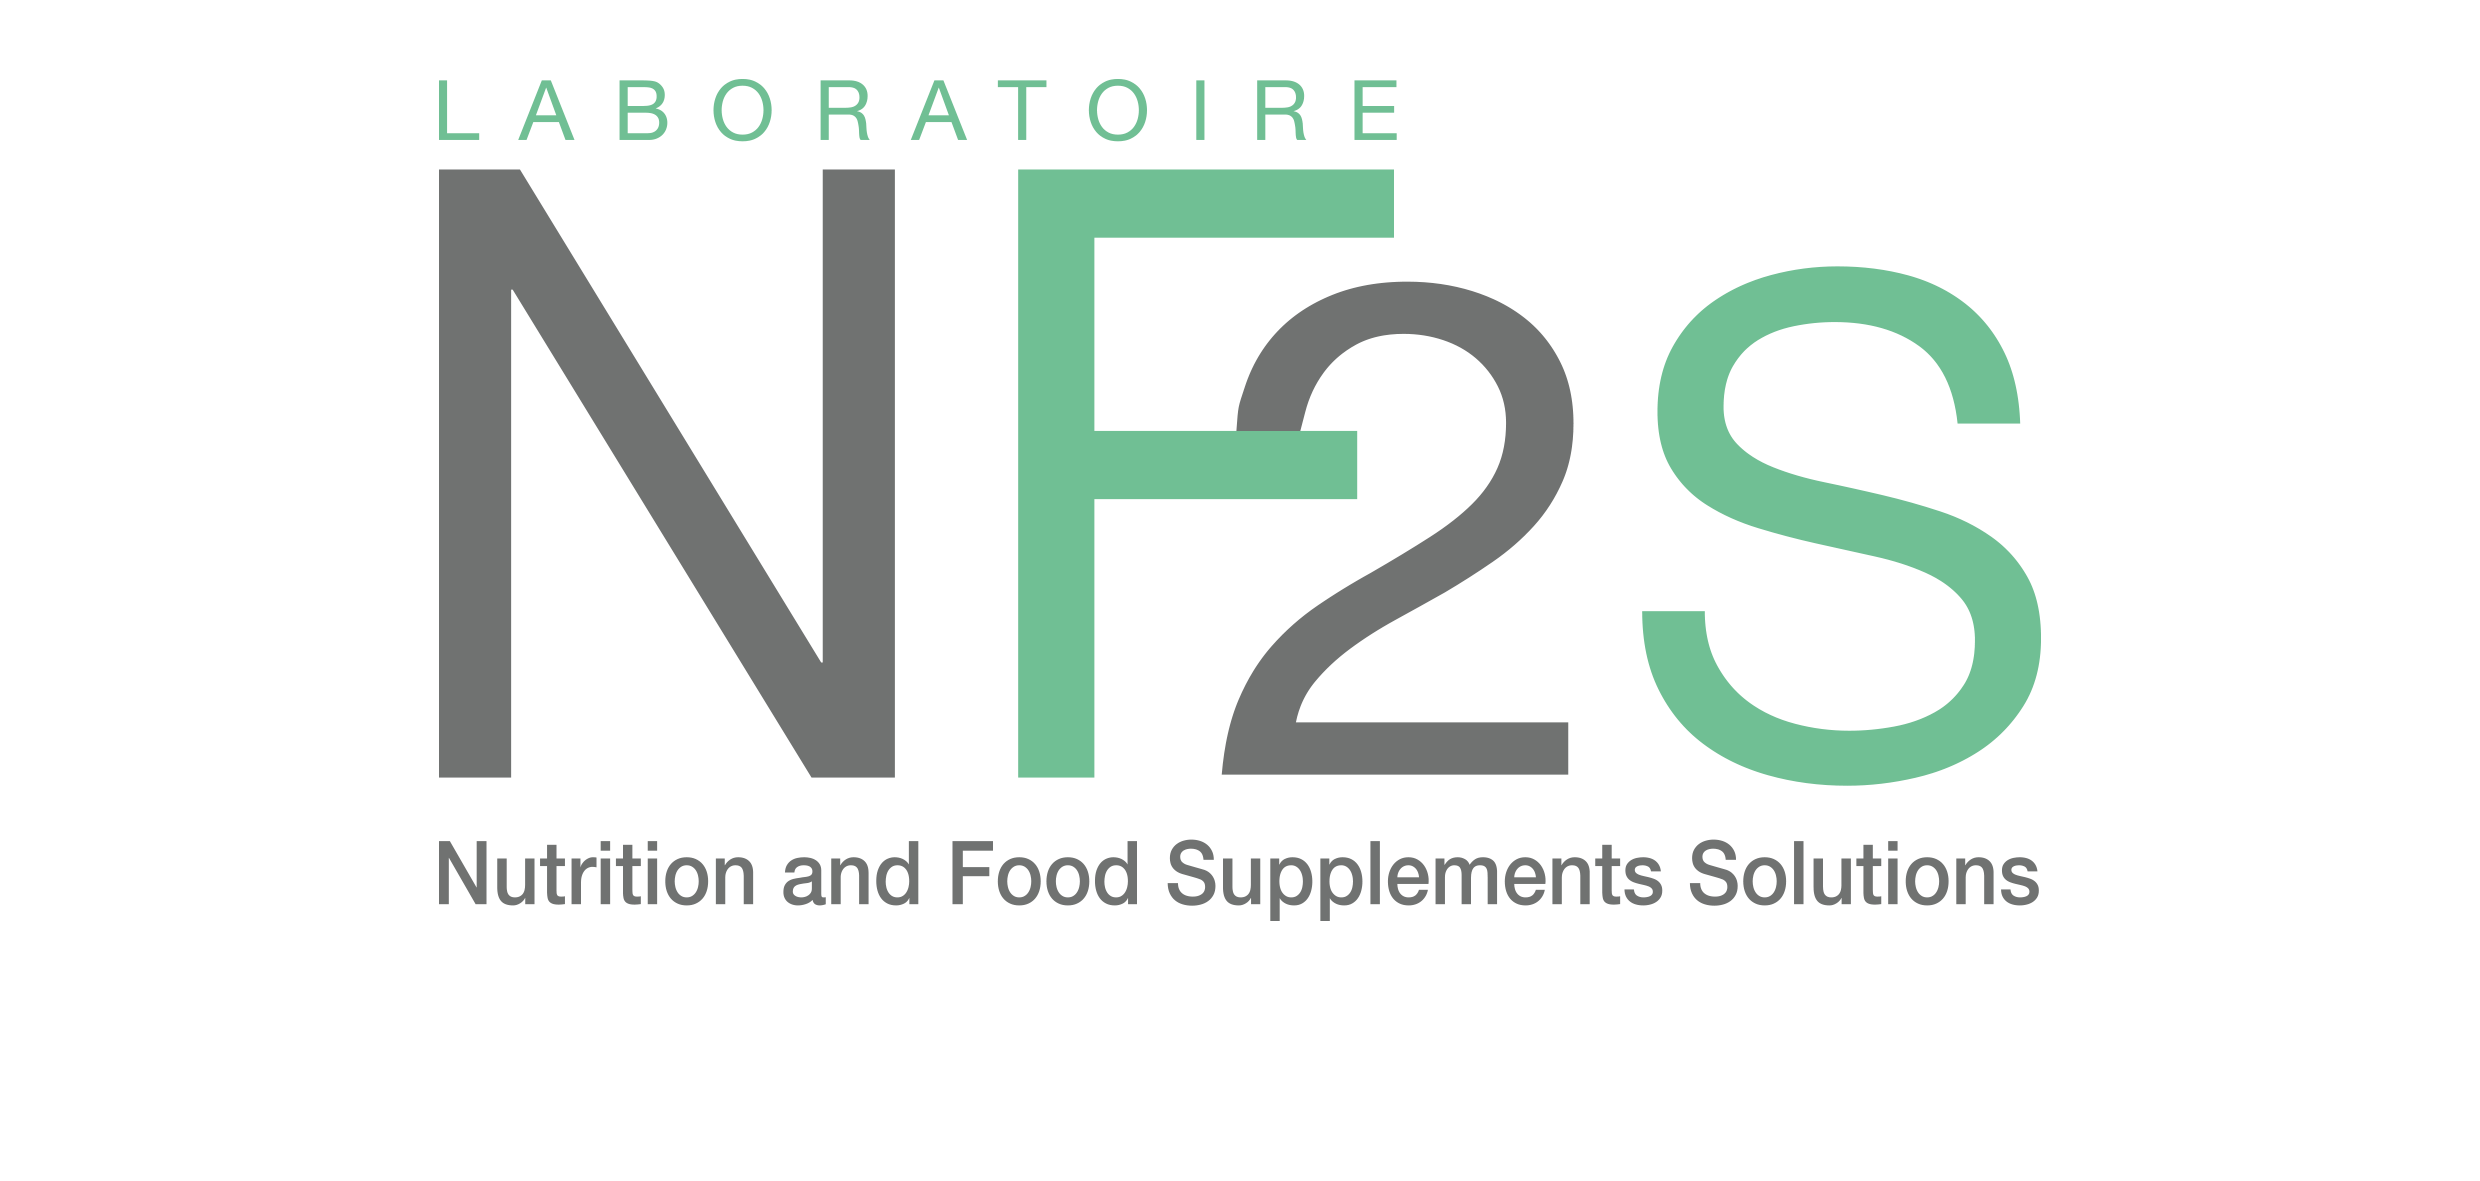 LABORATOIRE NF2S